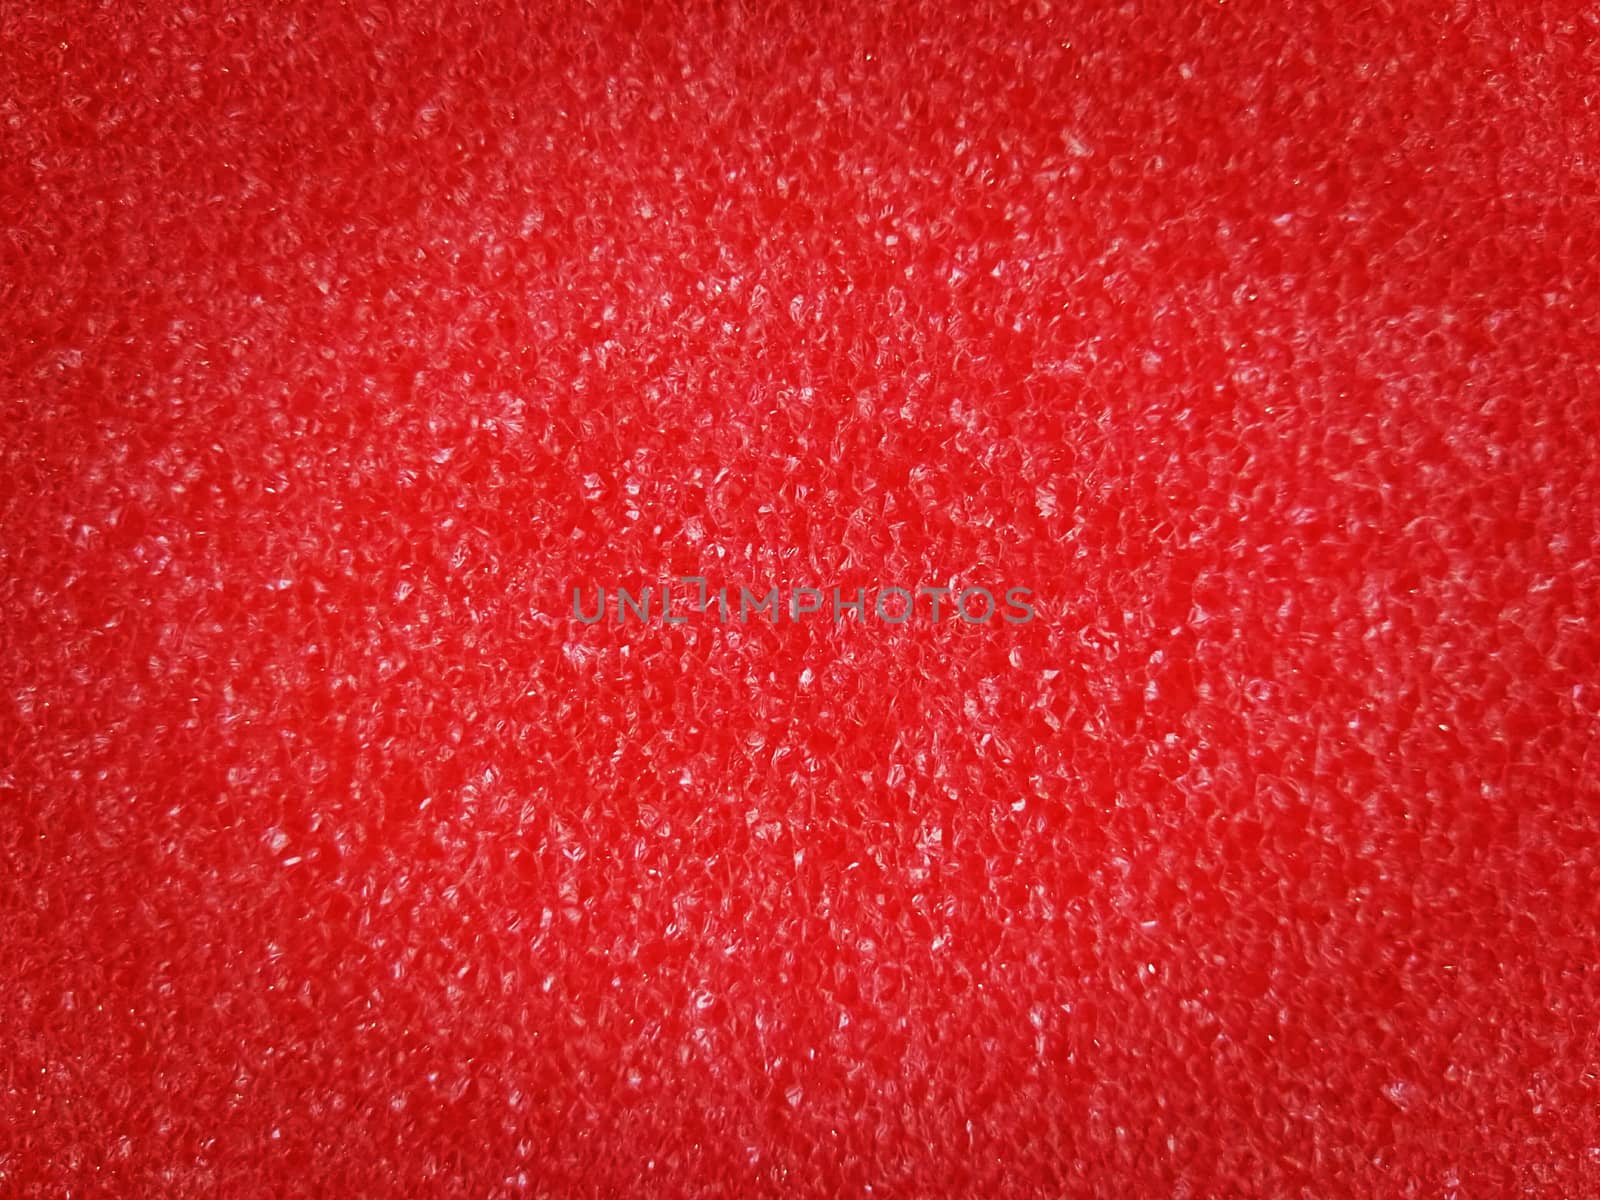 Red foam sponge texture background